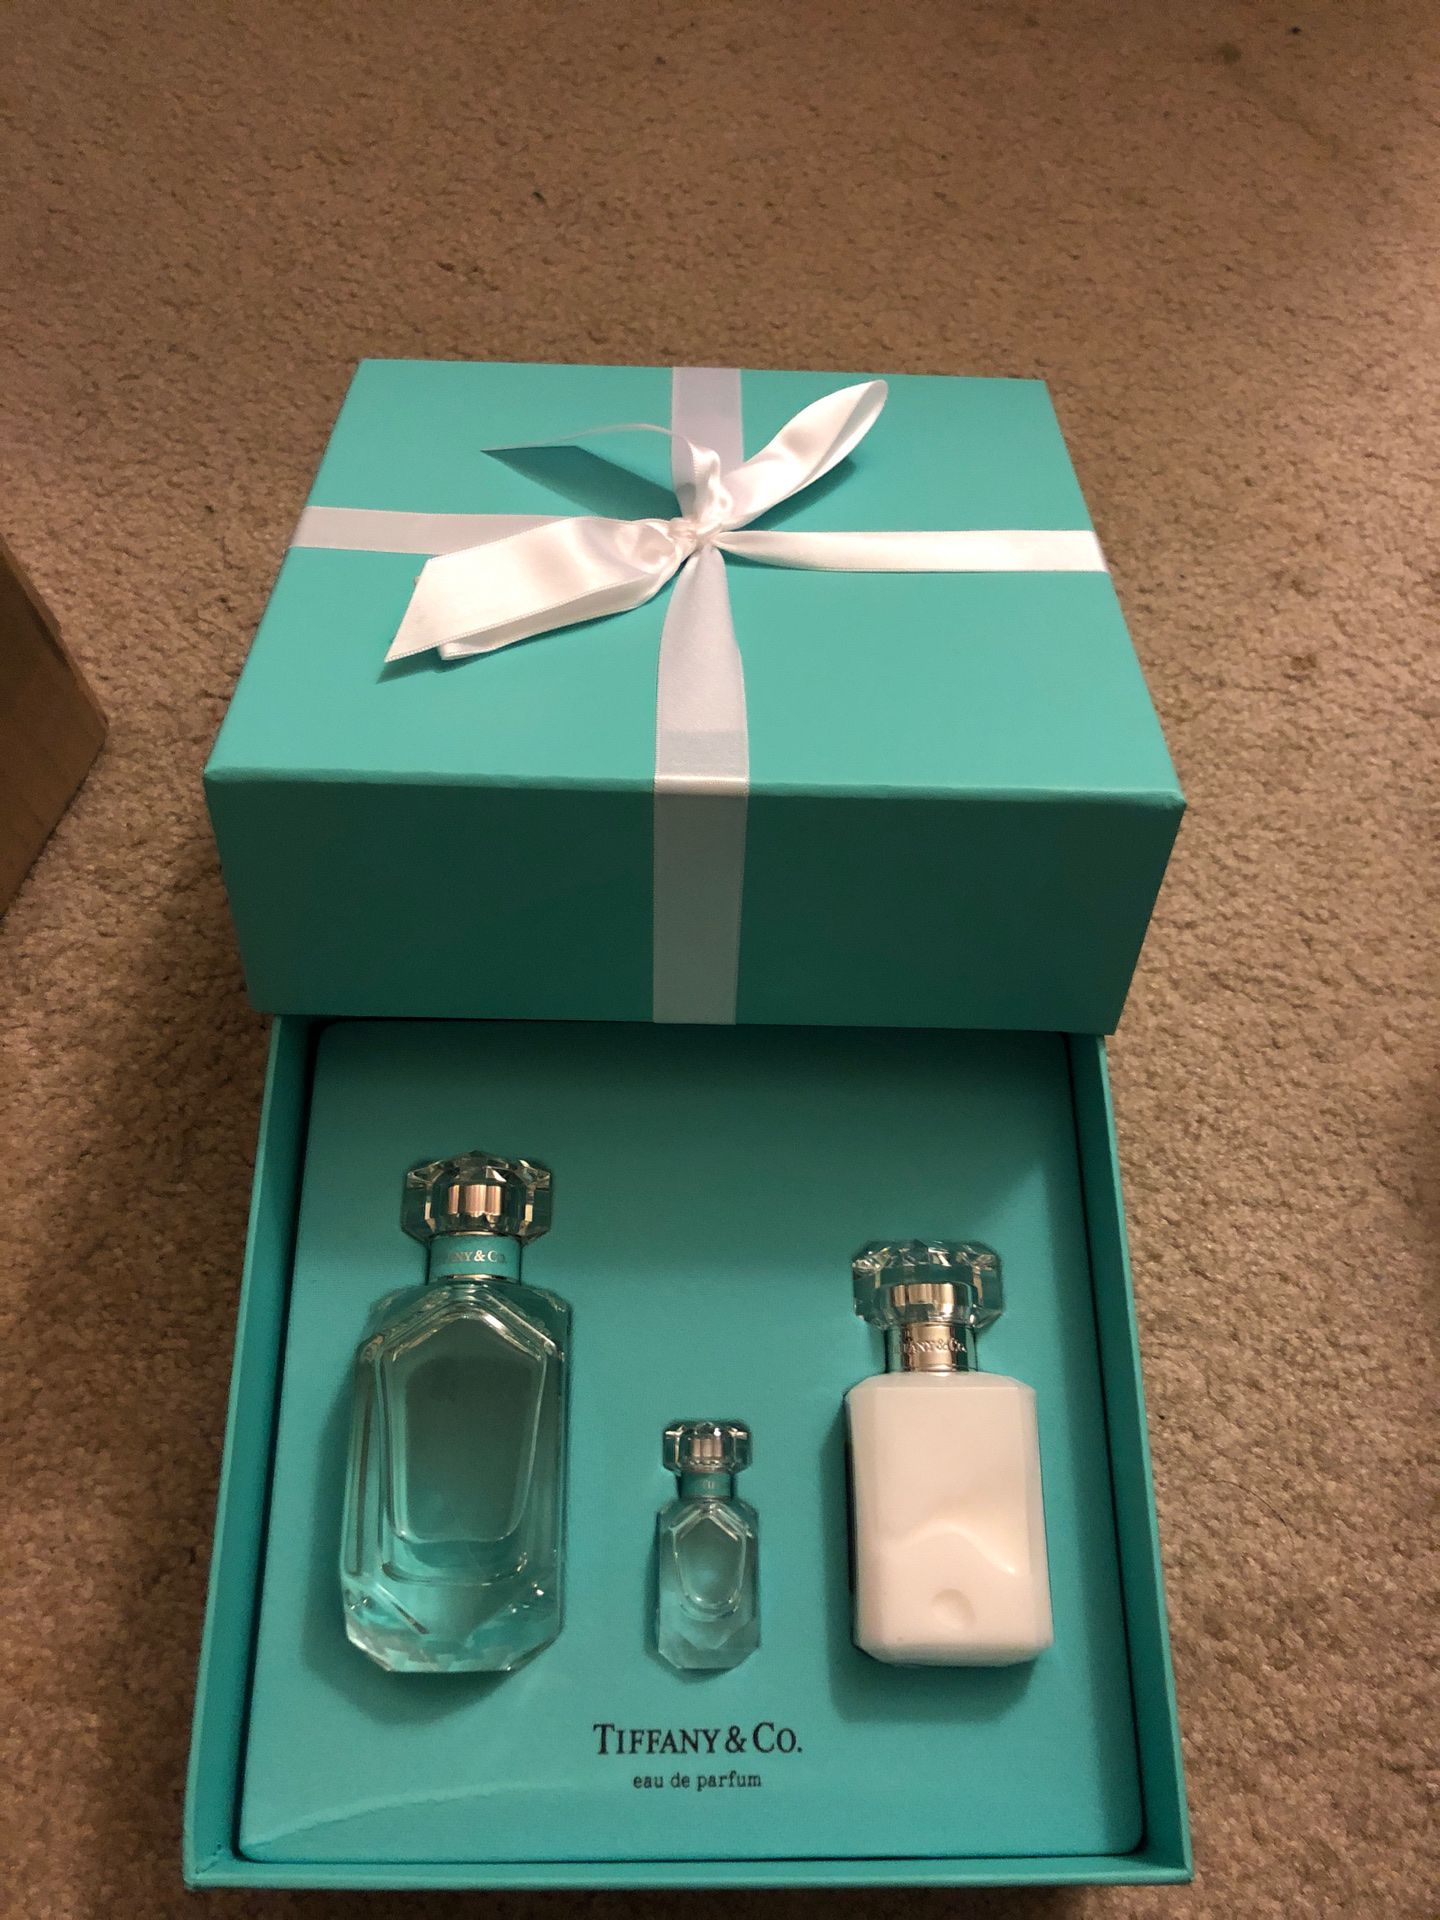 TIFFANY & CO Perfume and Body Lotion Gift set from Macys